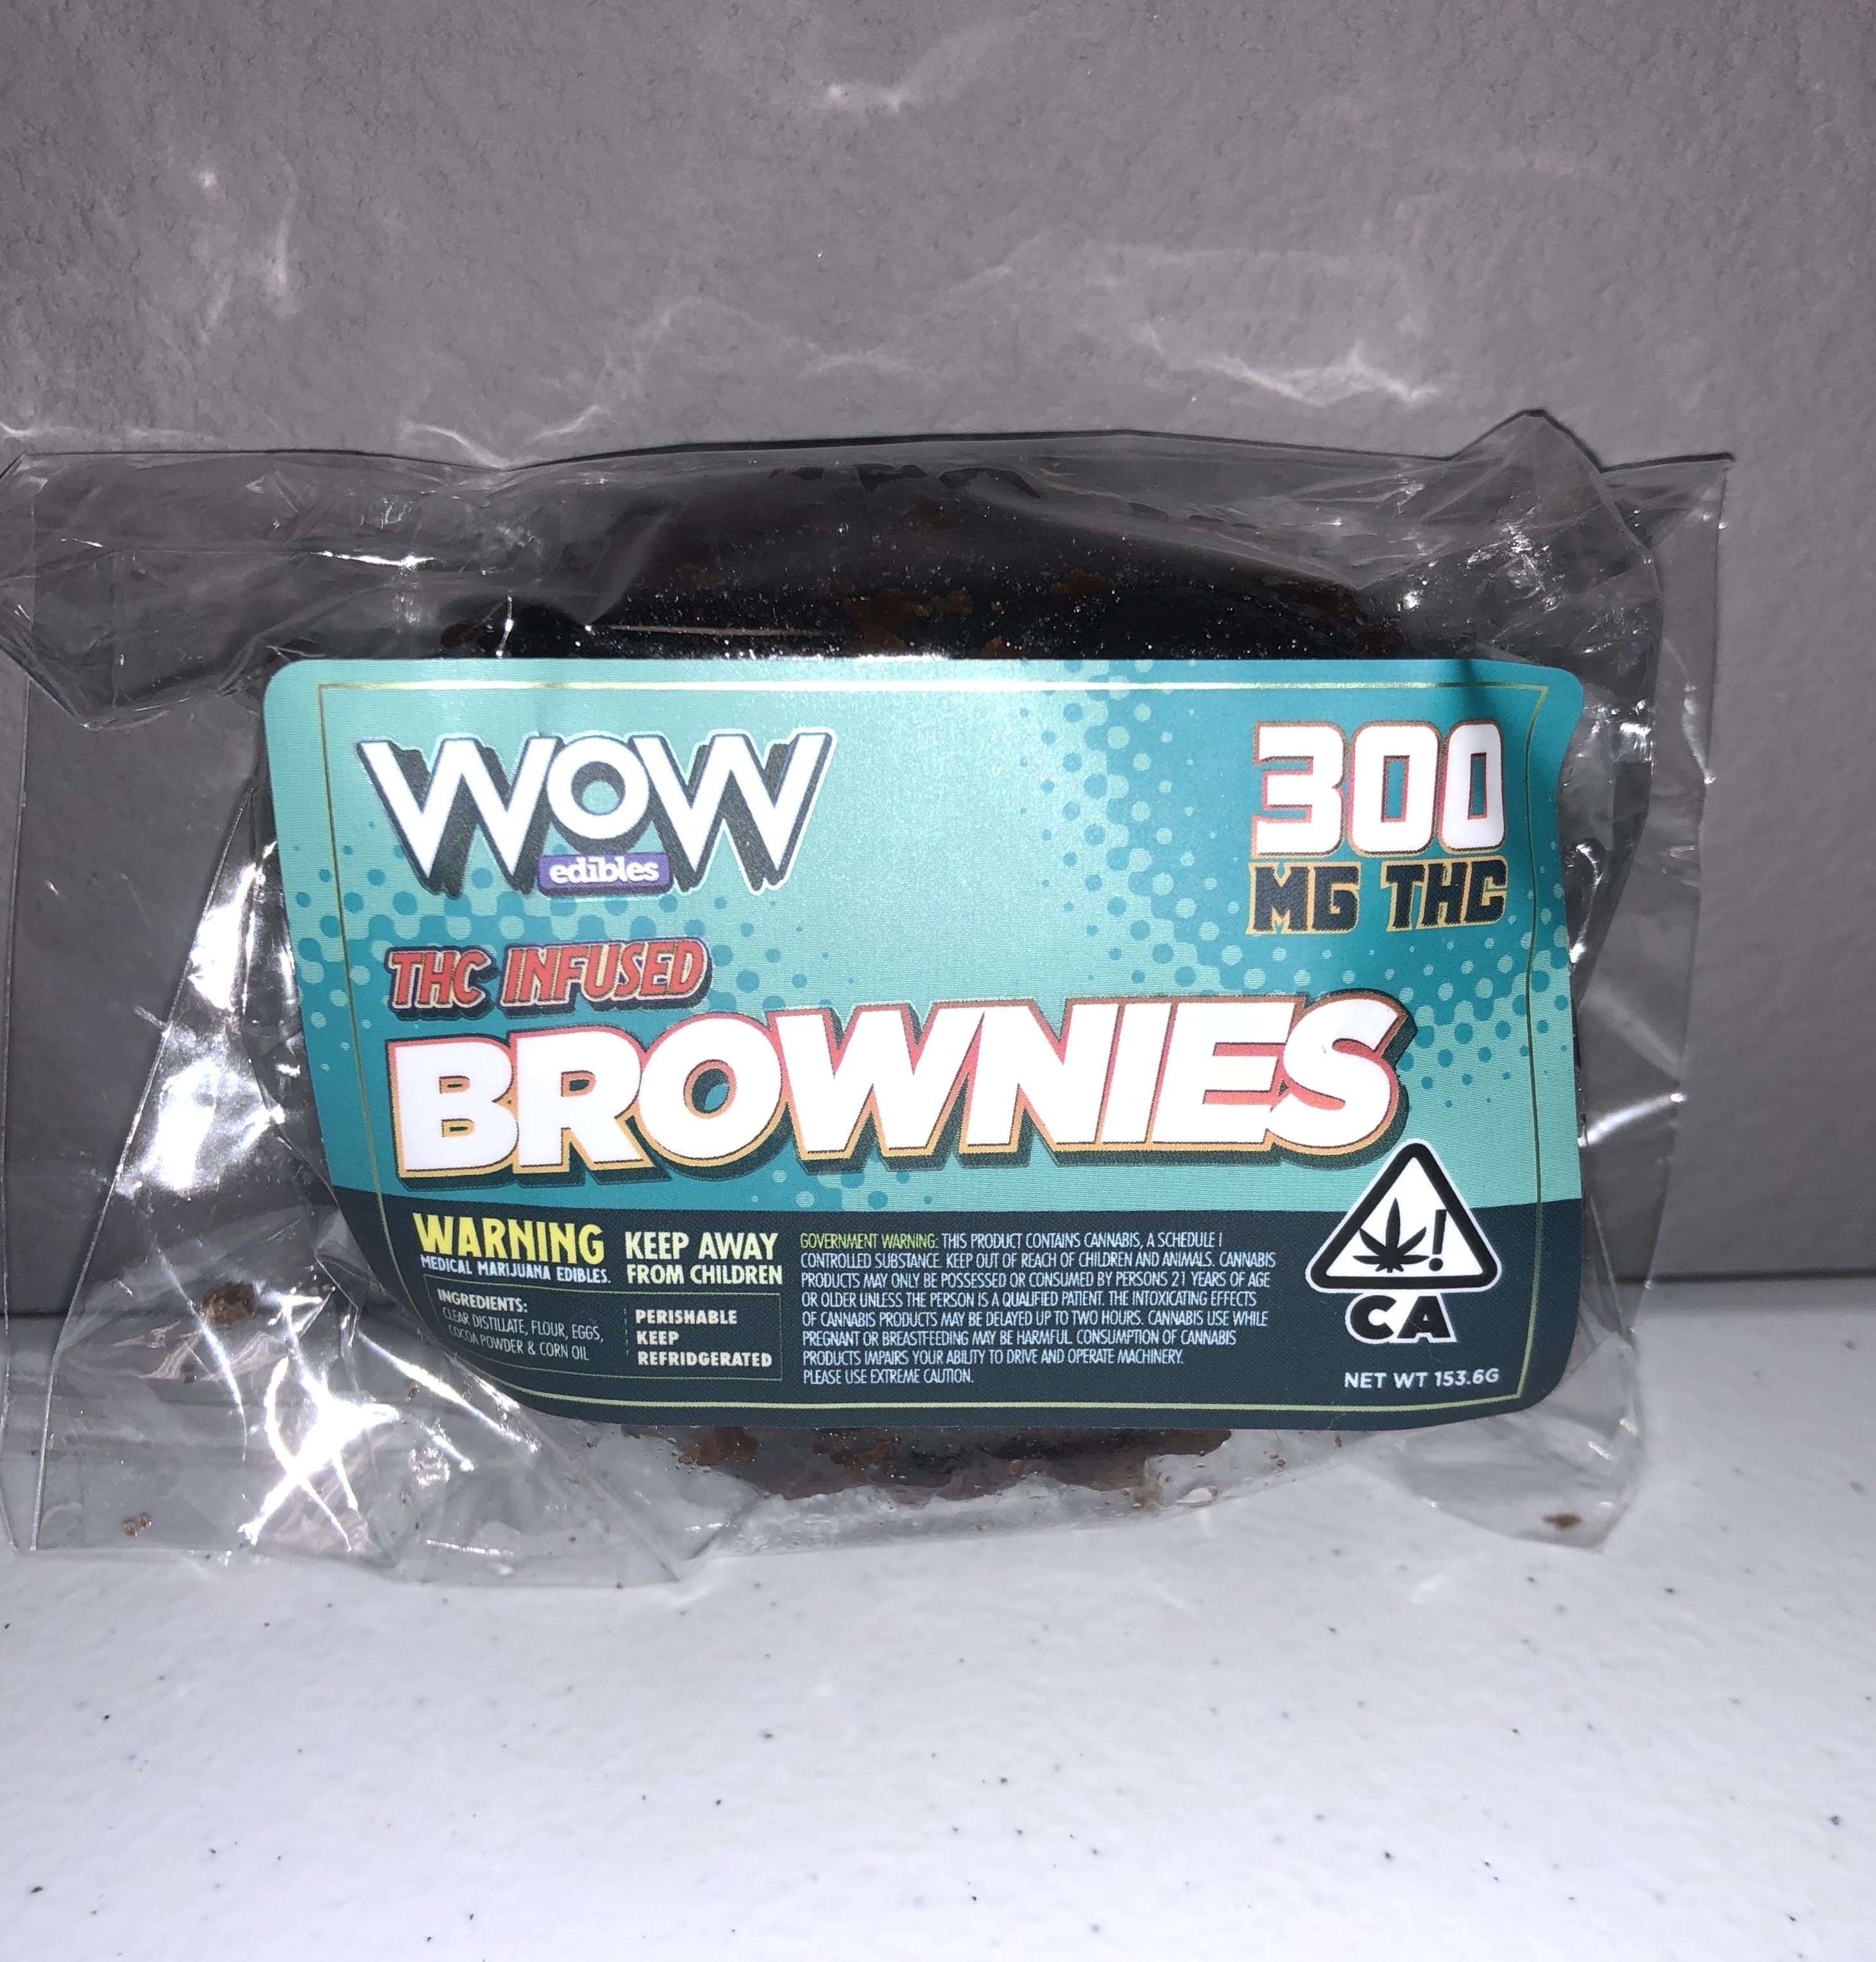 marijuana-dispensaries-broadway-25-cap-in-los-angeles-brownies-300mg